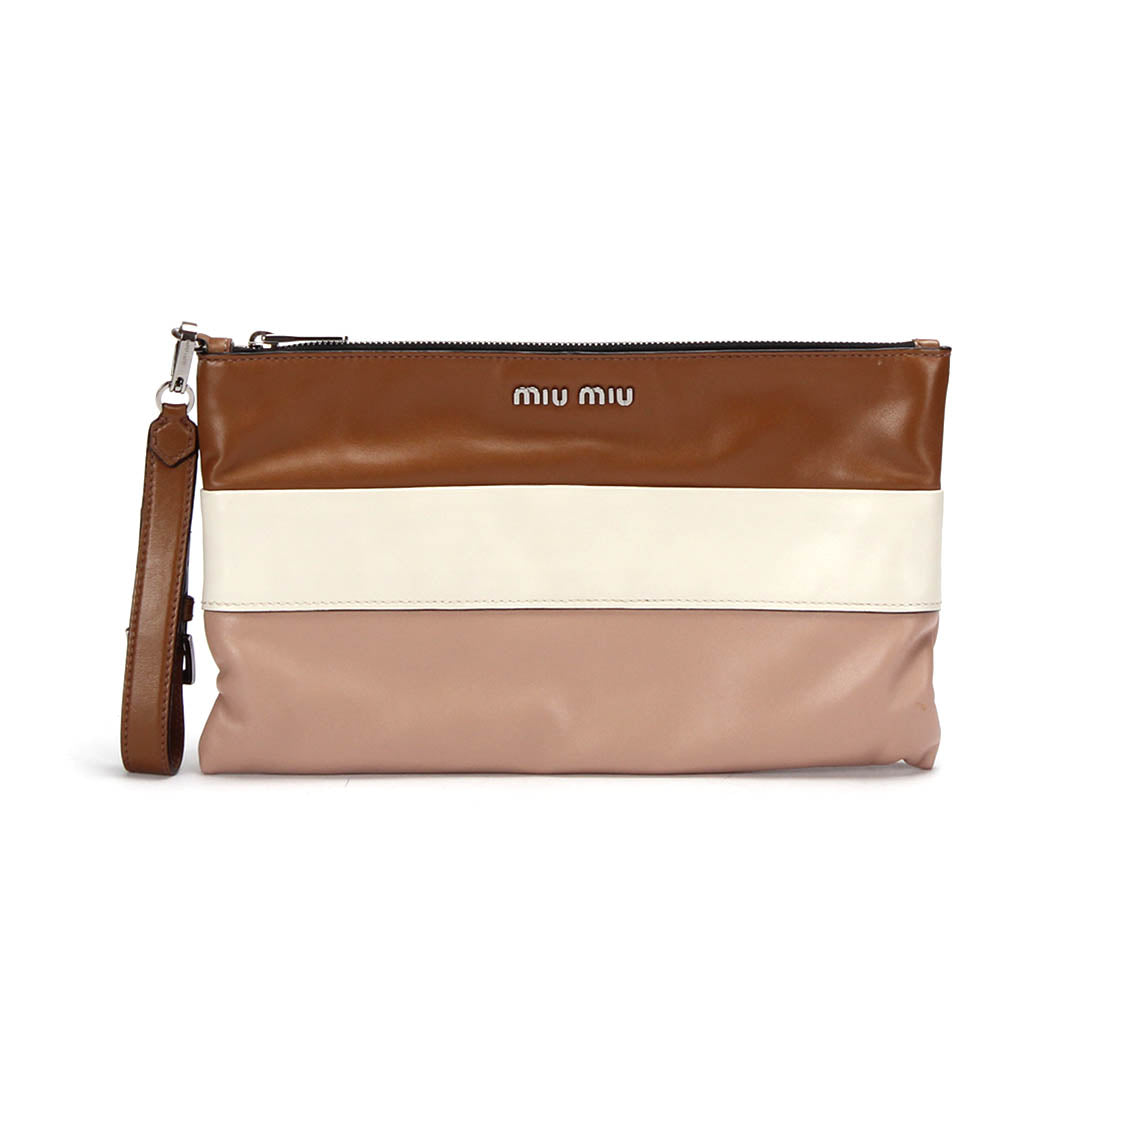 Tri-color Leather Zip Clutch Bag